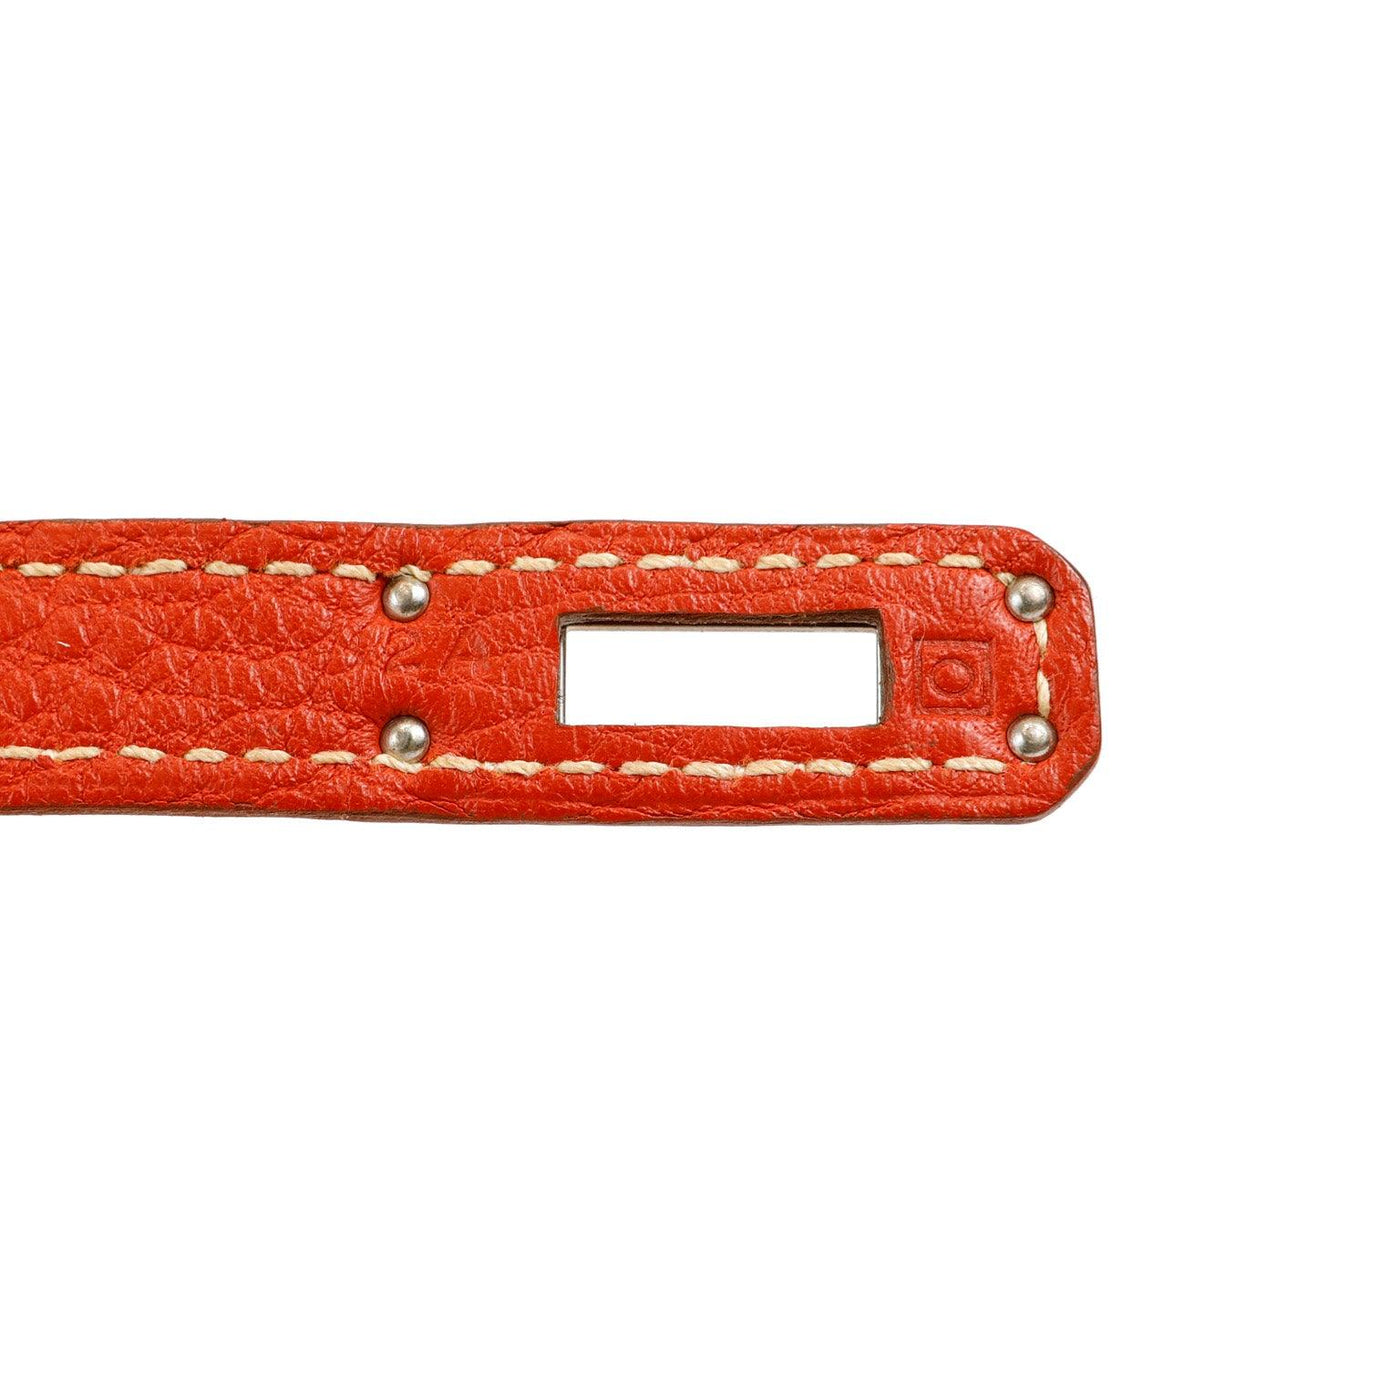 Hermès 25cm Tomato Red Togo Special Edition Birkin with Palladium Hardware - Only Authentics